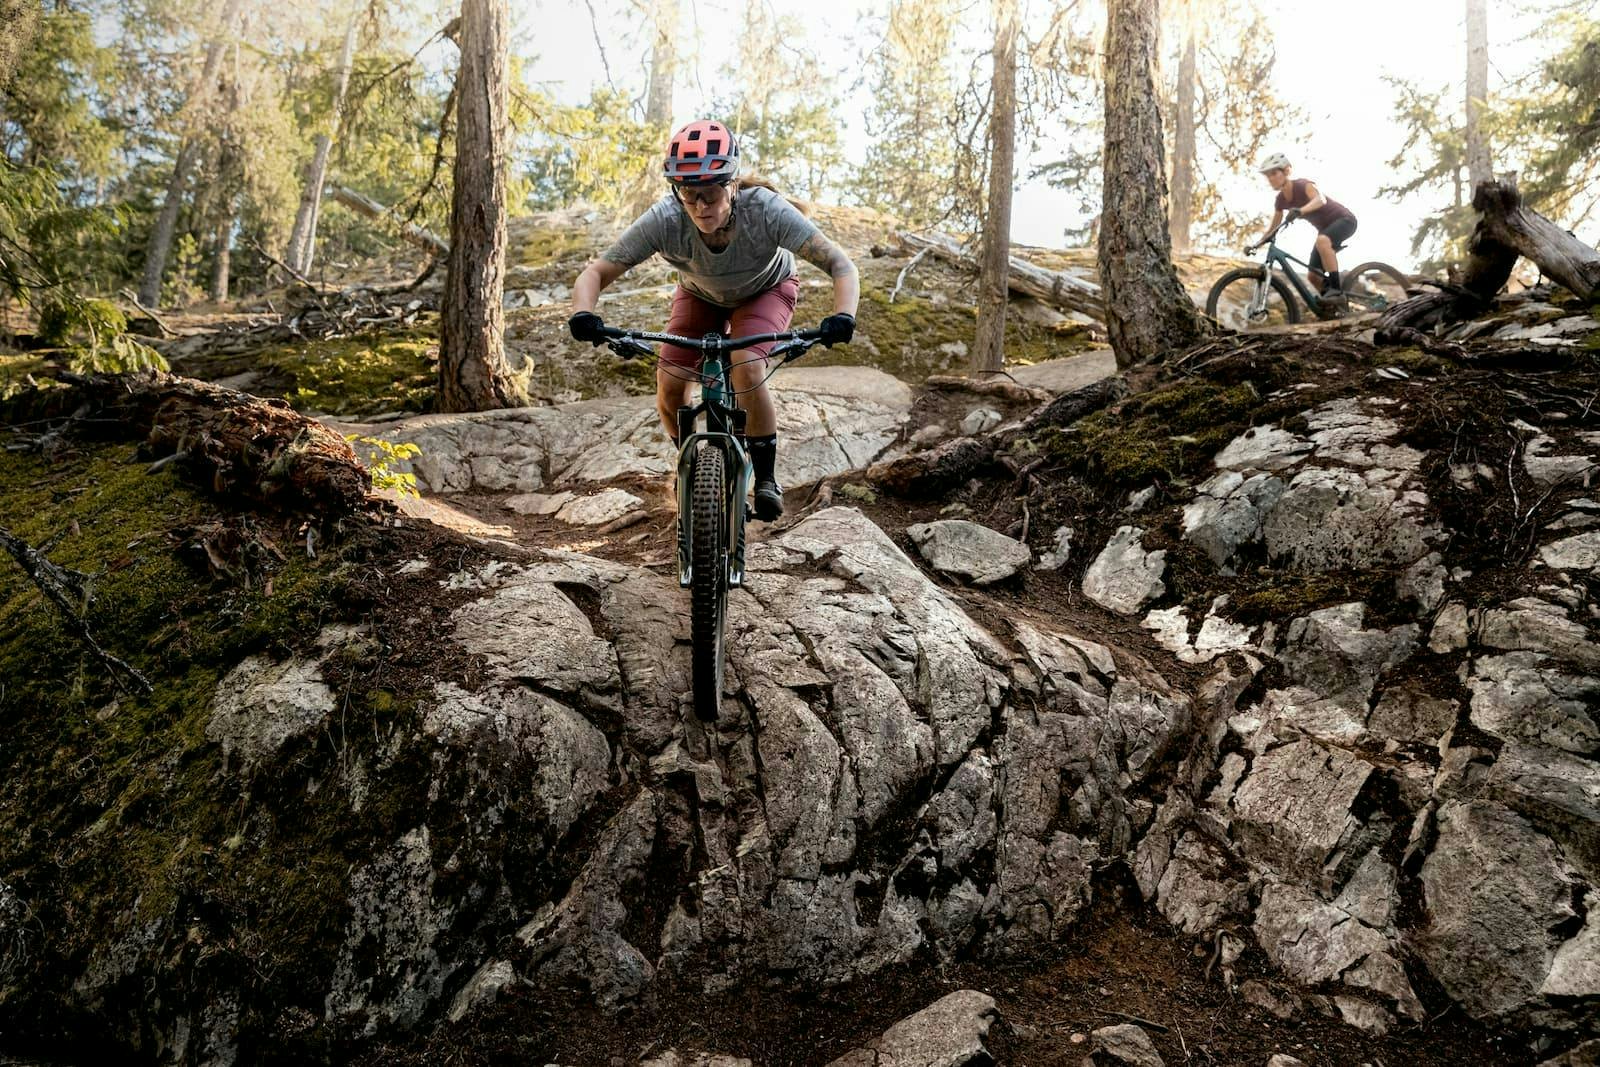 Mountain biker - Sarah Leishman descending through the forest on a rocky trail